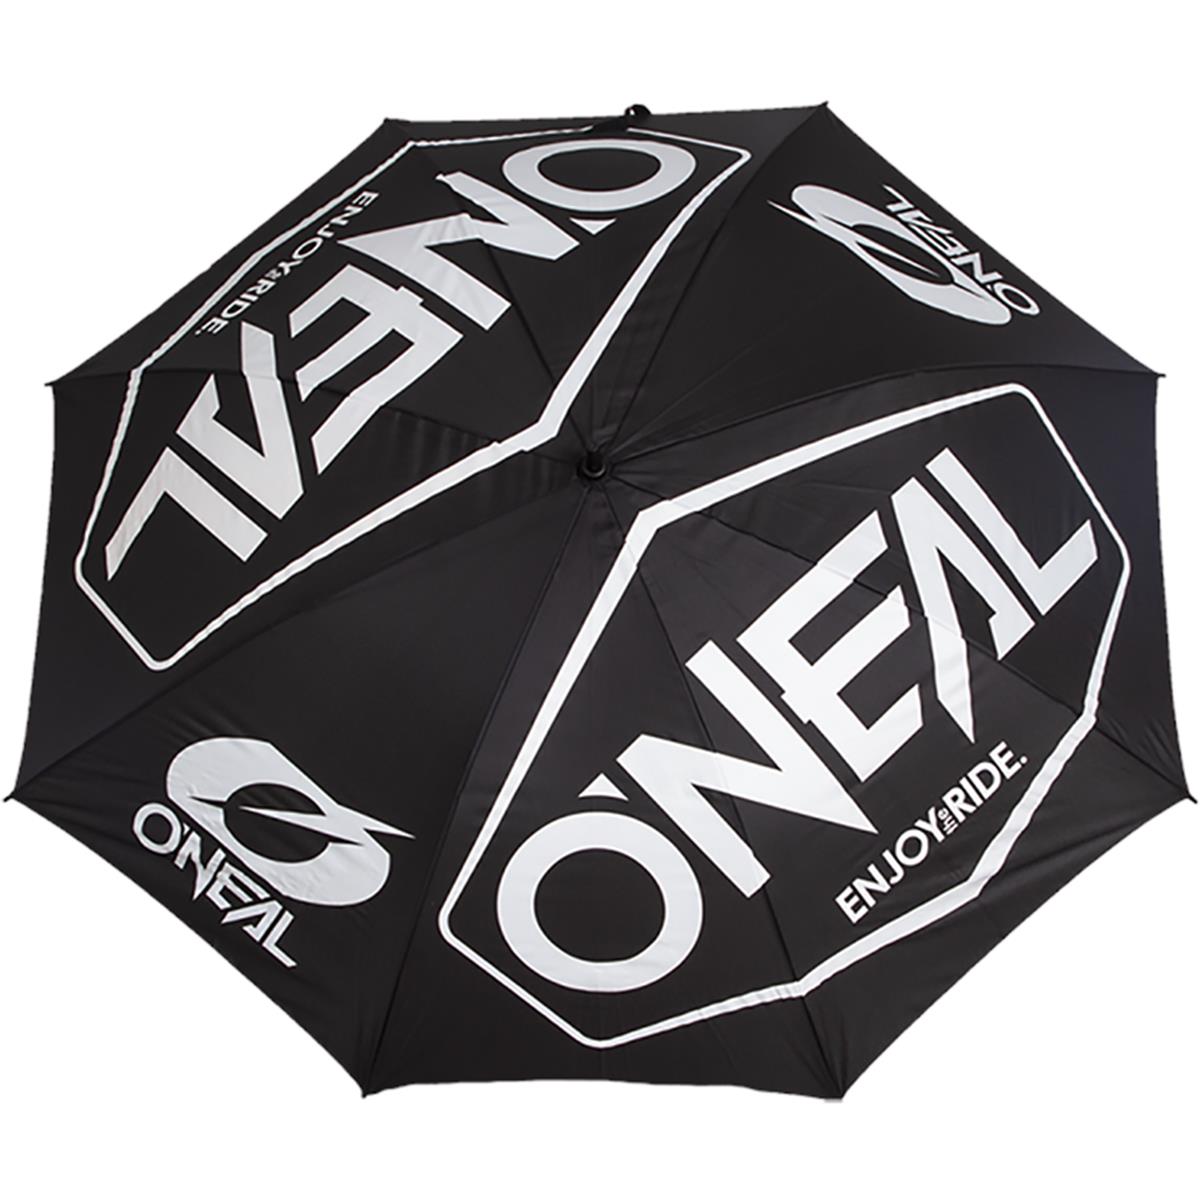 O'Neal Racing Hexx Umbrella